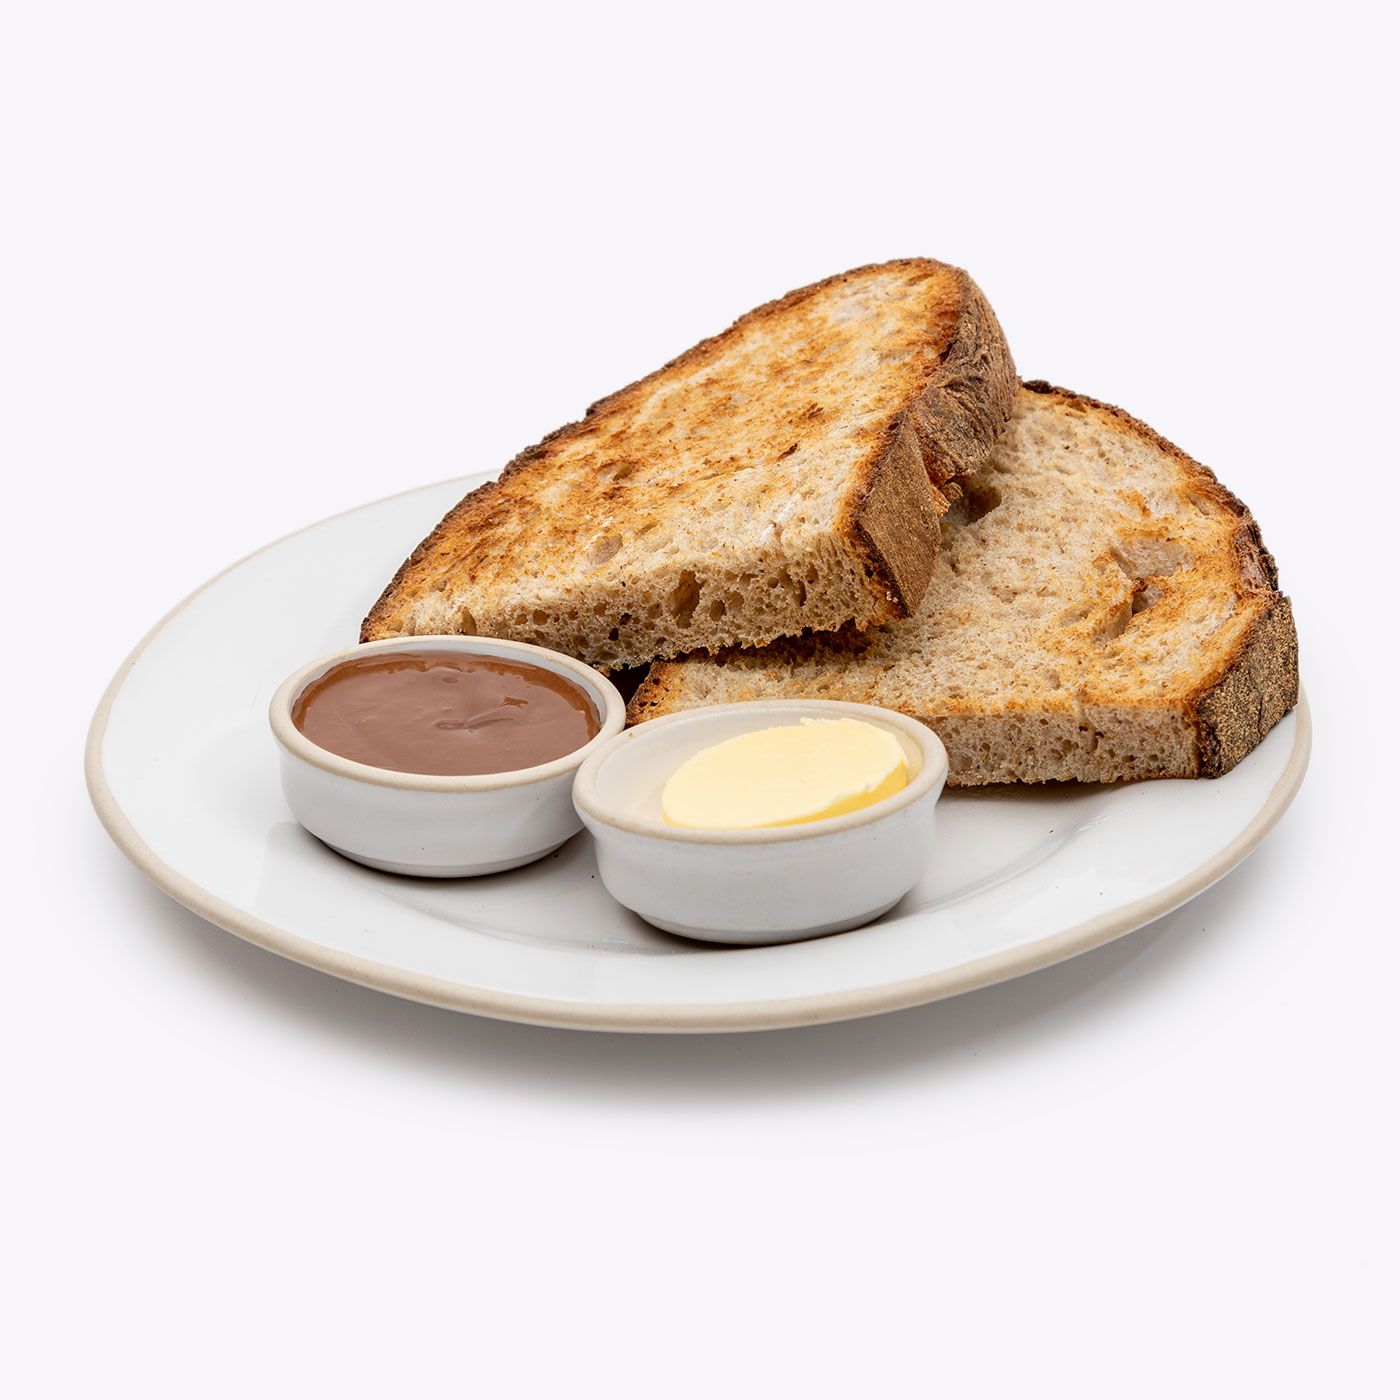 Dark Sourdough toast with Butter & Chocolate and Hazelnut spread